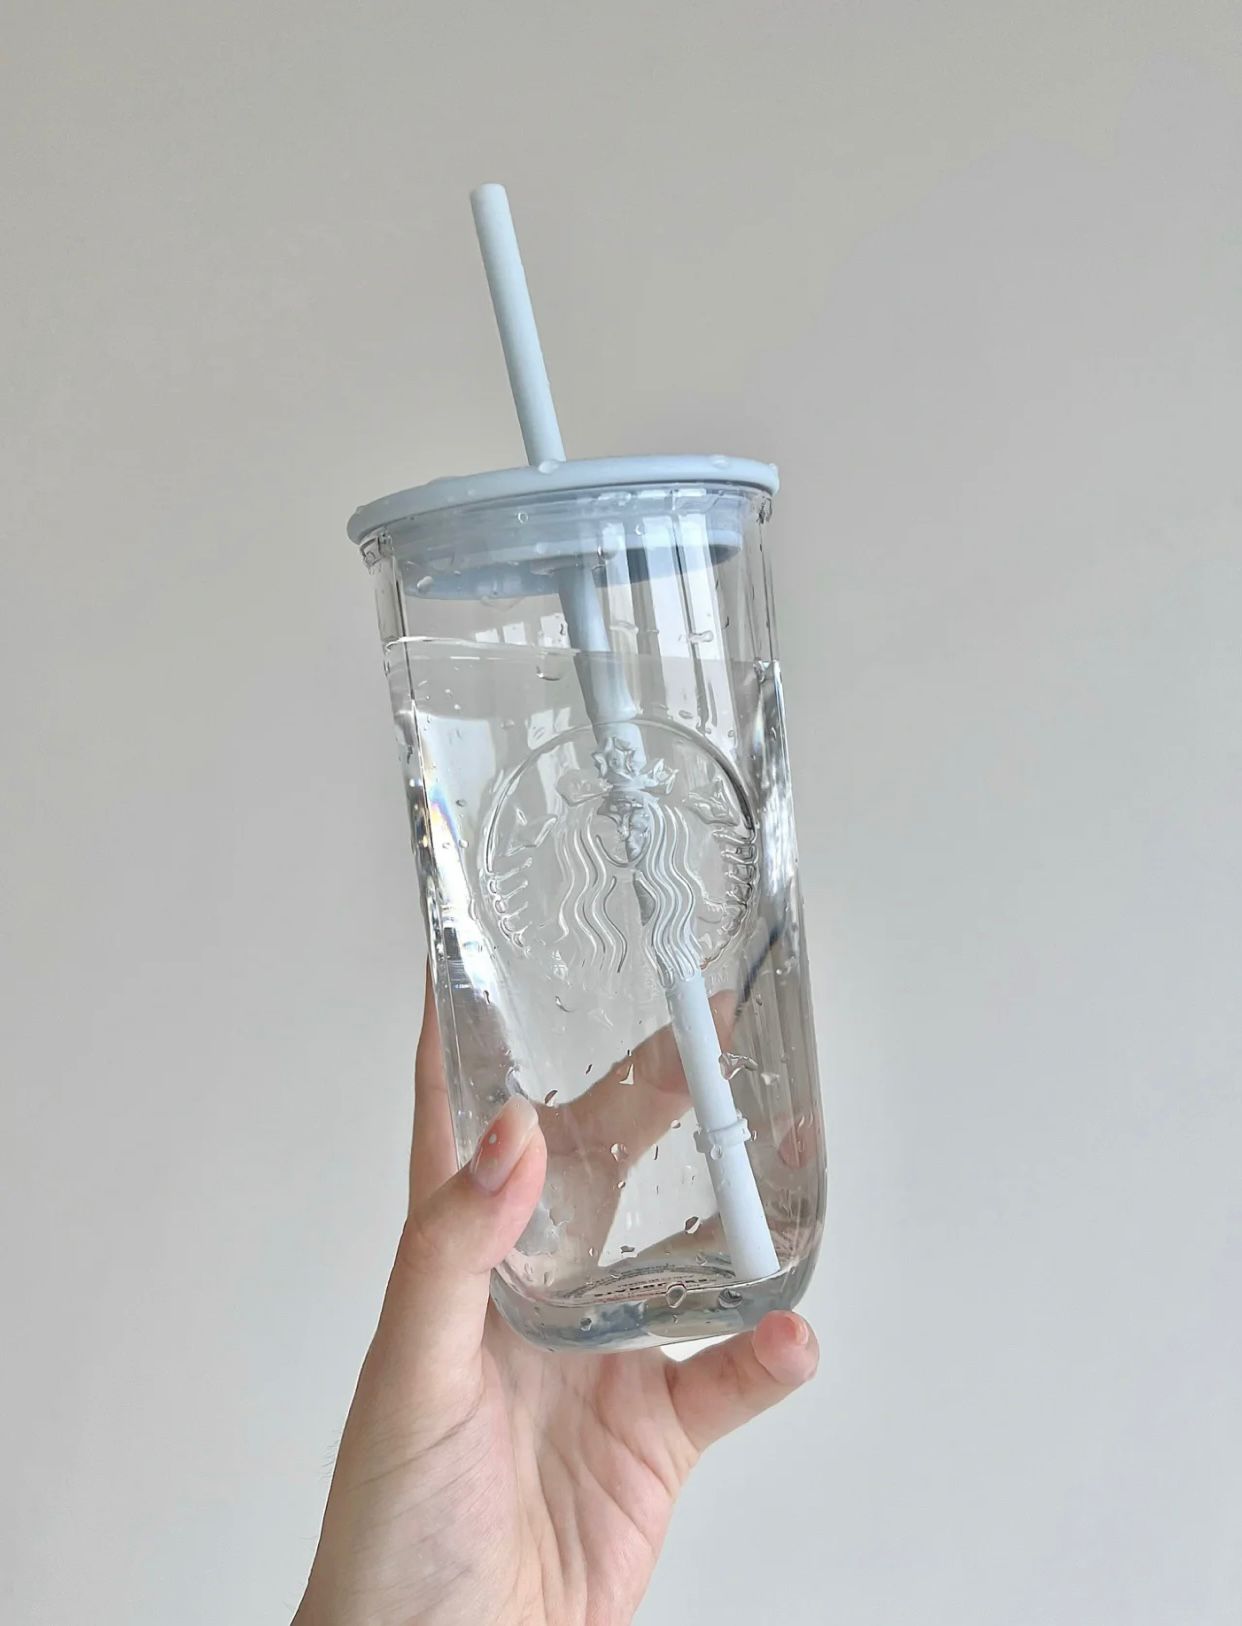 ☕️@starbucks Starbucks NEW Recycled Glass mug is gorgeous! Triangle bo